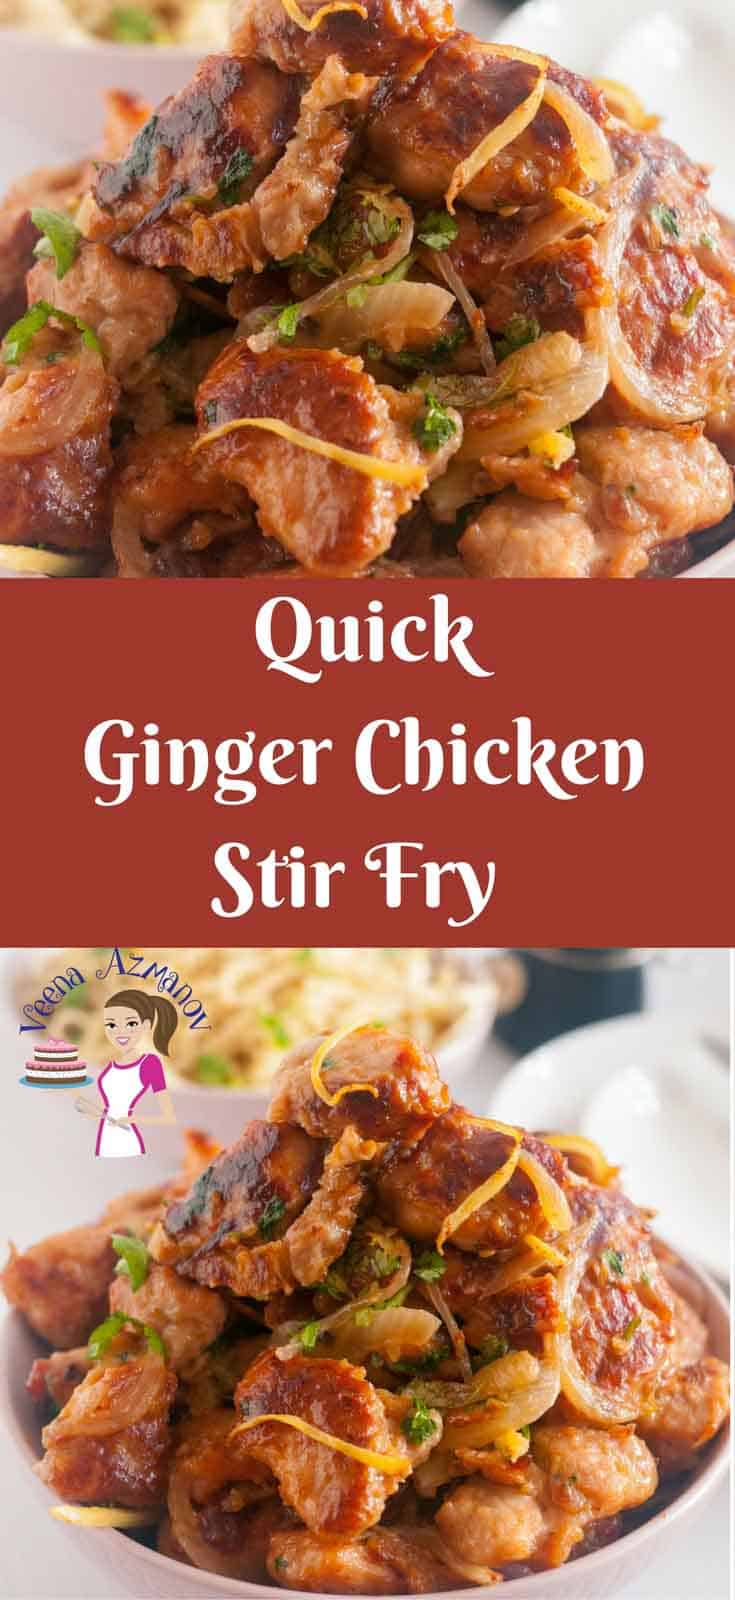 Quick Ginger Chicken Stir Fry Recipe Veena Azmanov